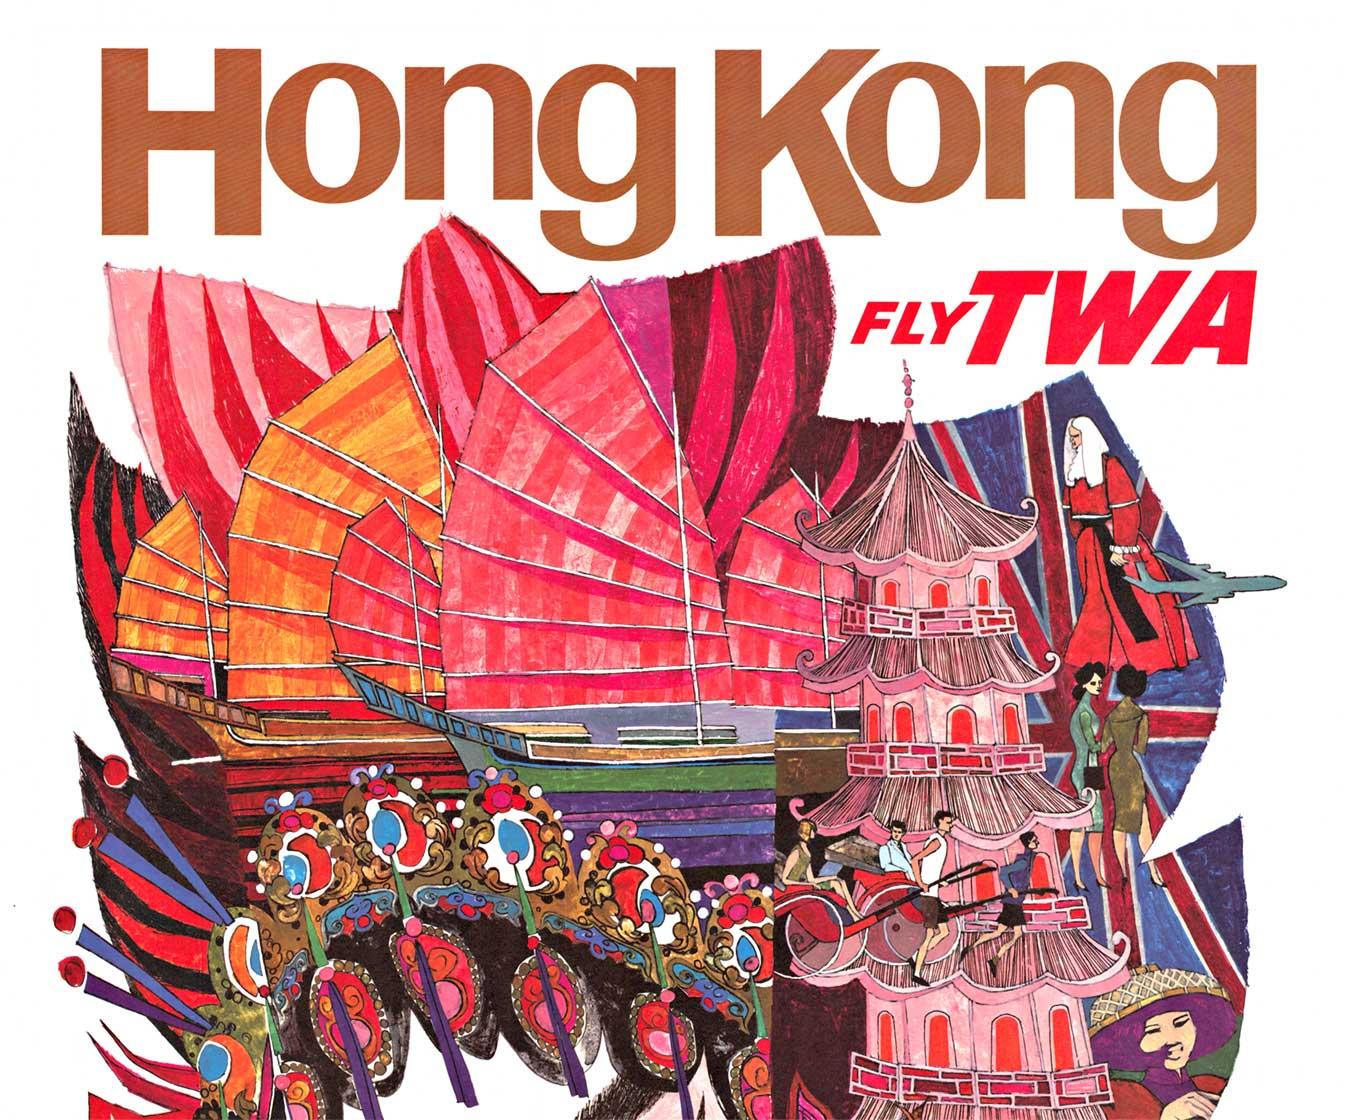 Affiche de voyage vintage originale Hong Kong Fly TWA - Print de David Klein